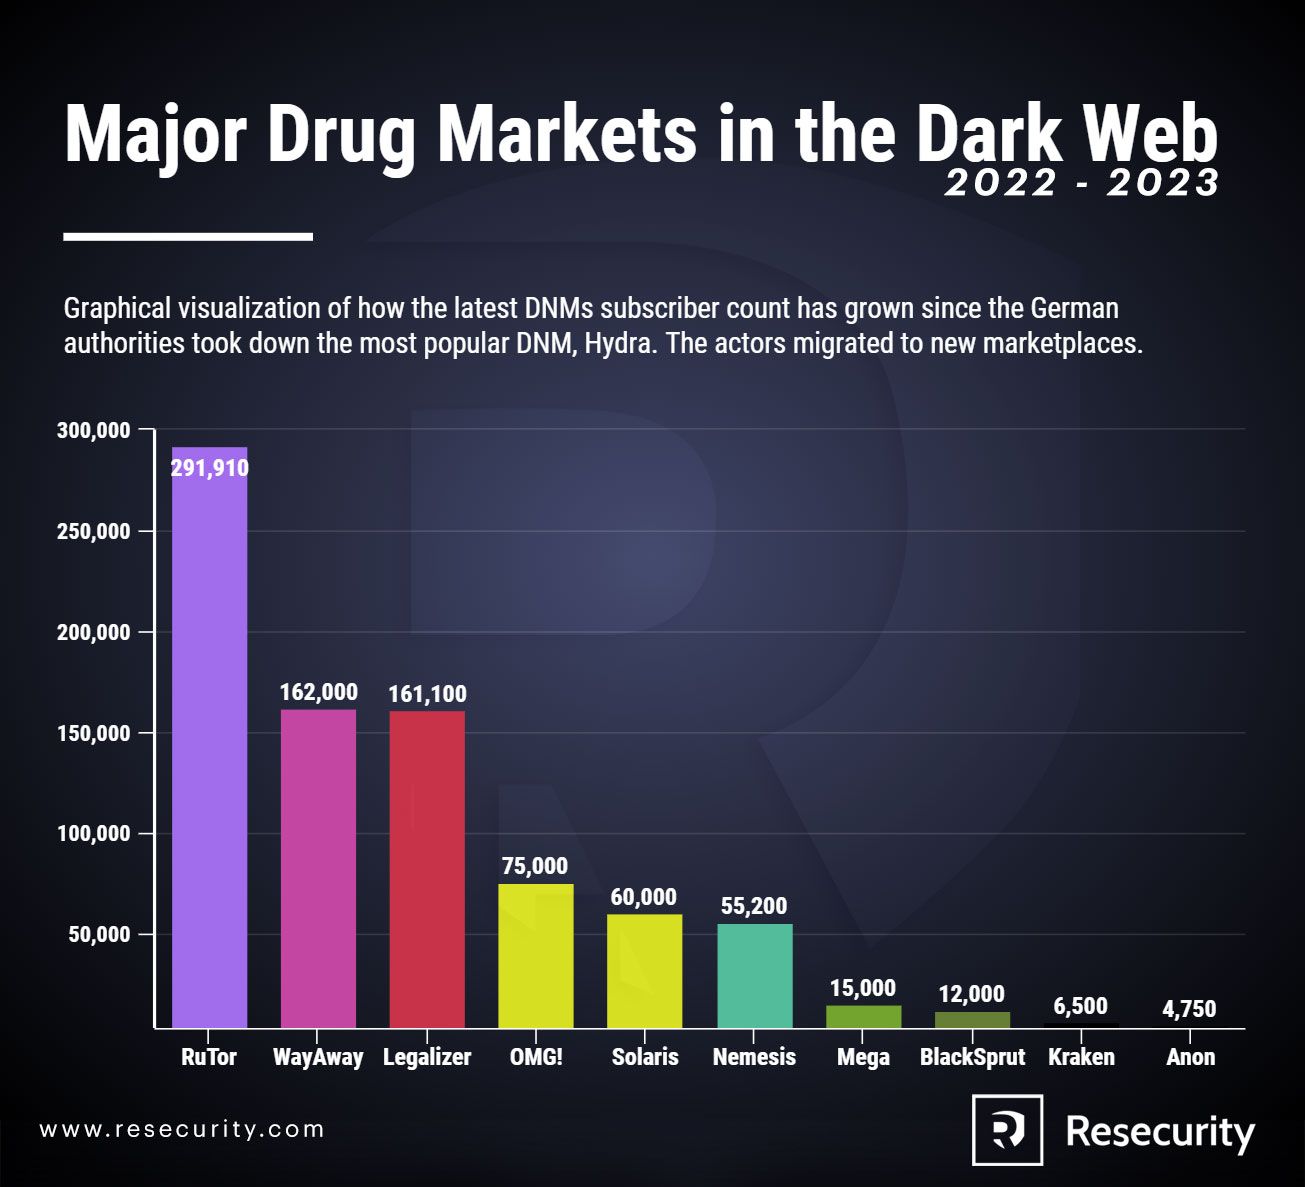 rutor wayaway legalizer solaris nemesis mega blacksprut kraken anon market omg!omg! dnm marketplace dark web net drugs illegal pharmacy